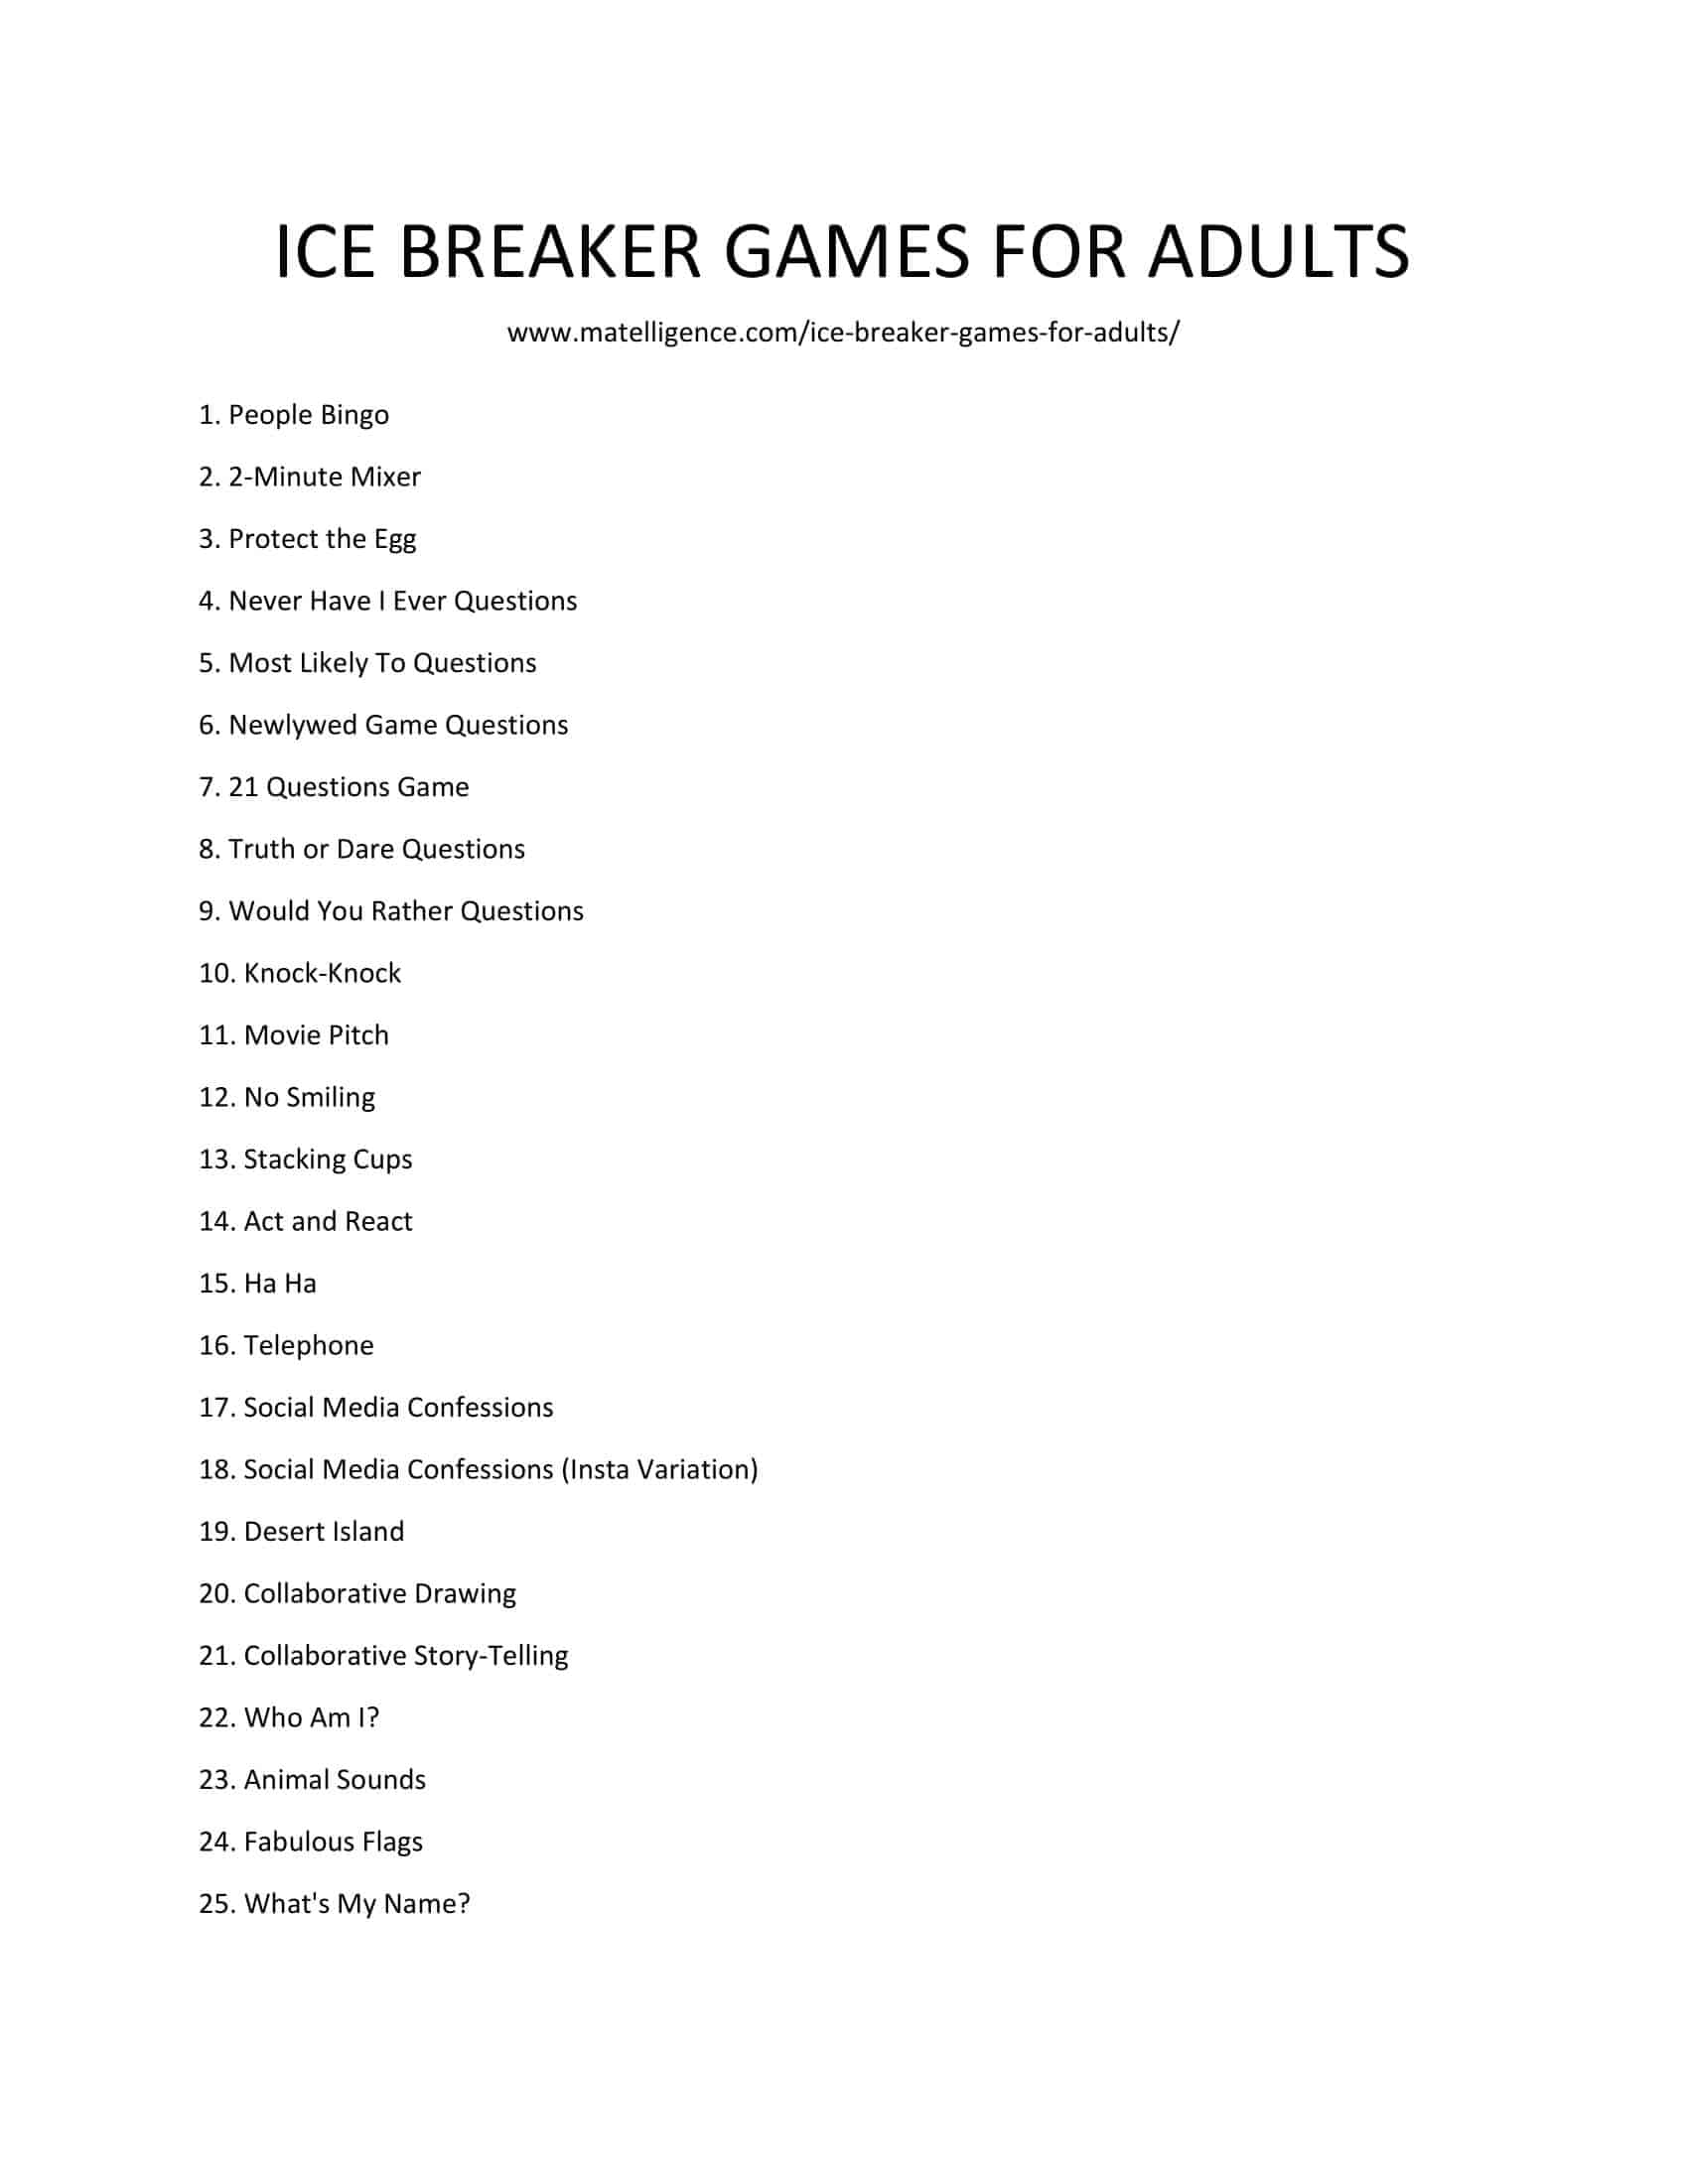 list of ice breakers